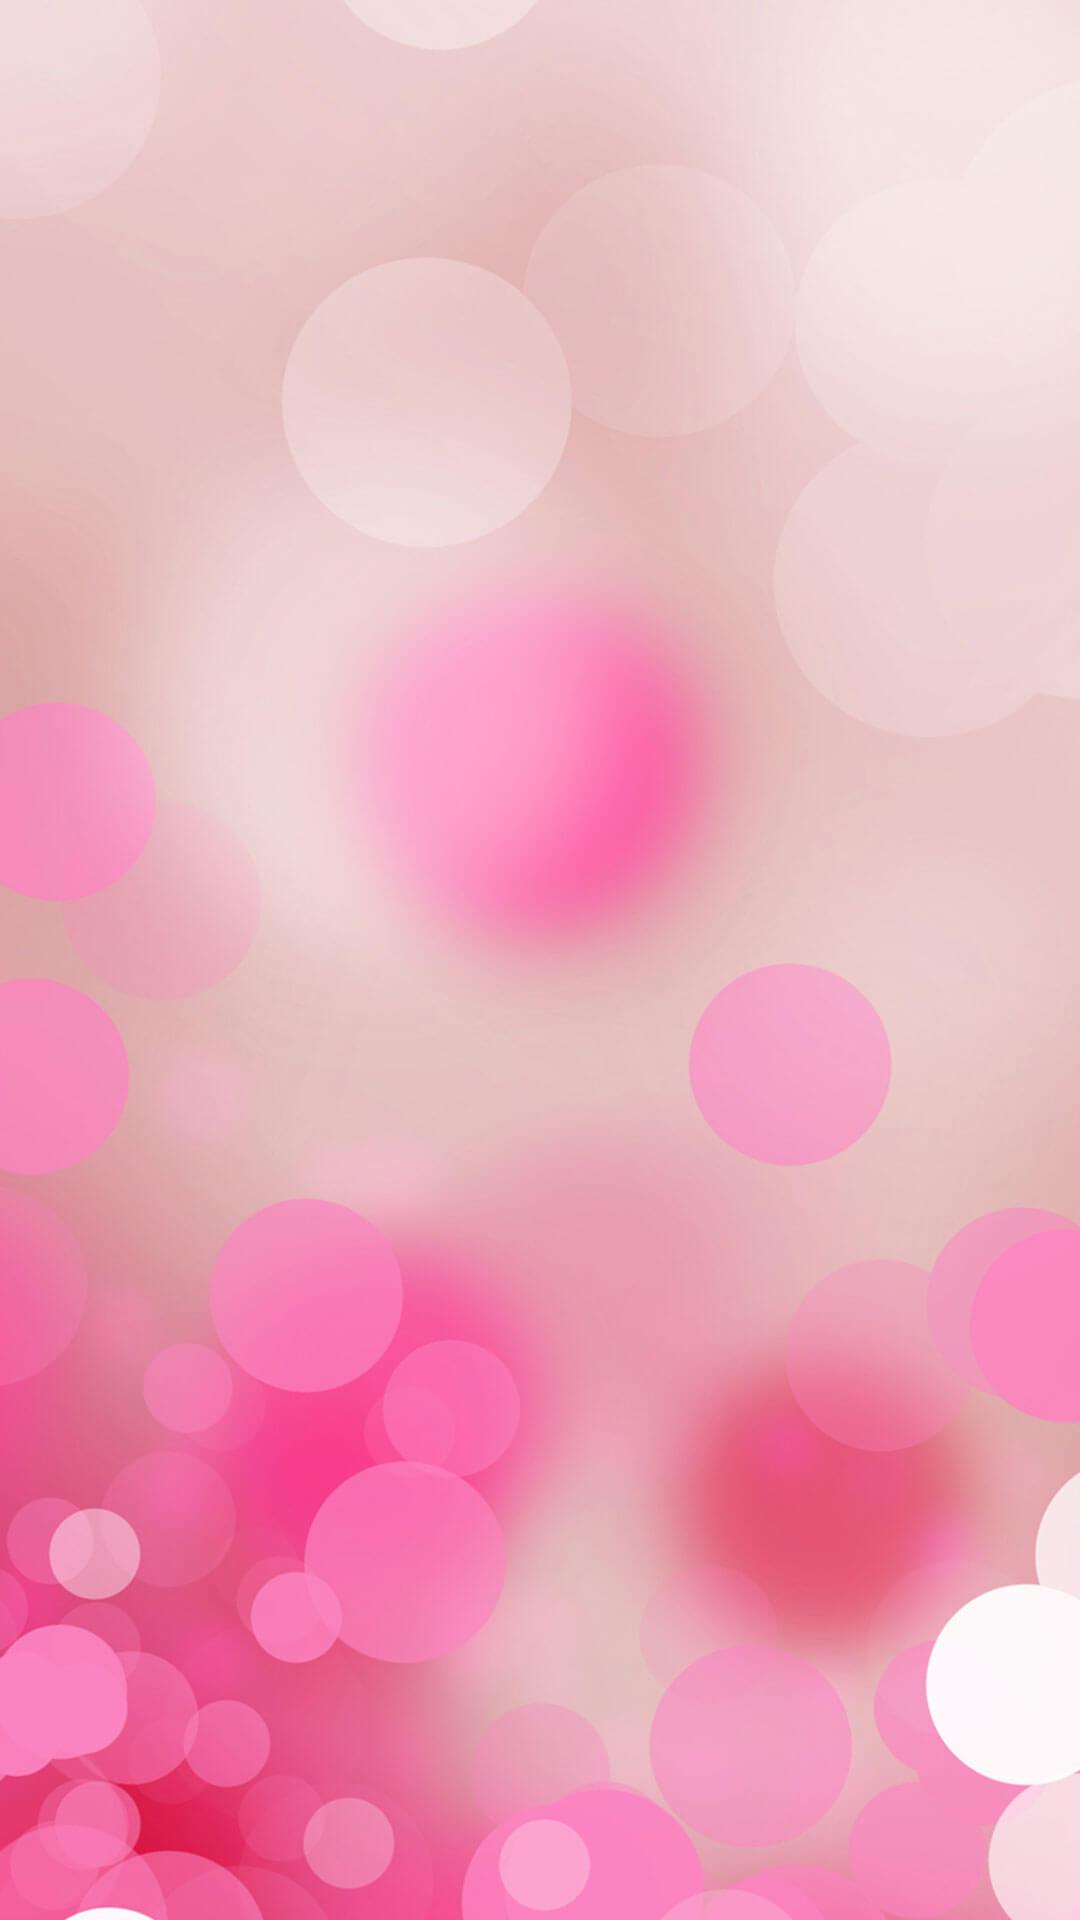 Cool Pink iPhone 6 Wallpaper Tumblr Wallpaper iPhone